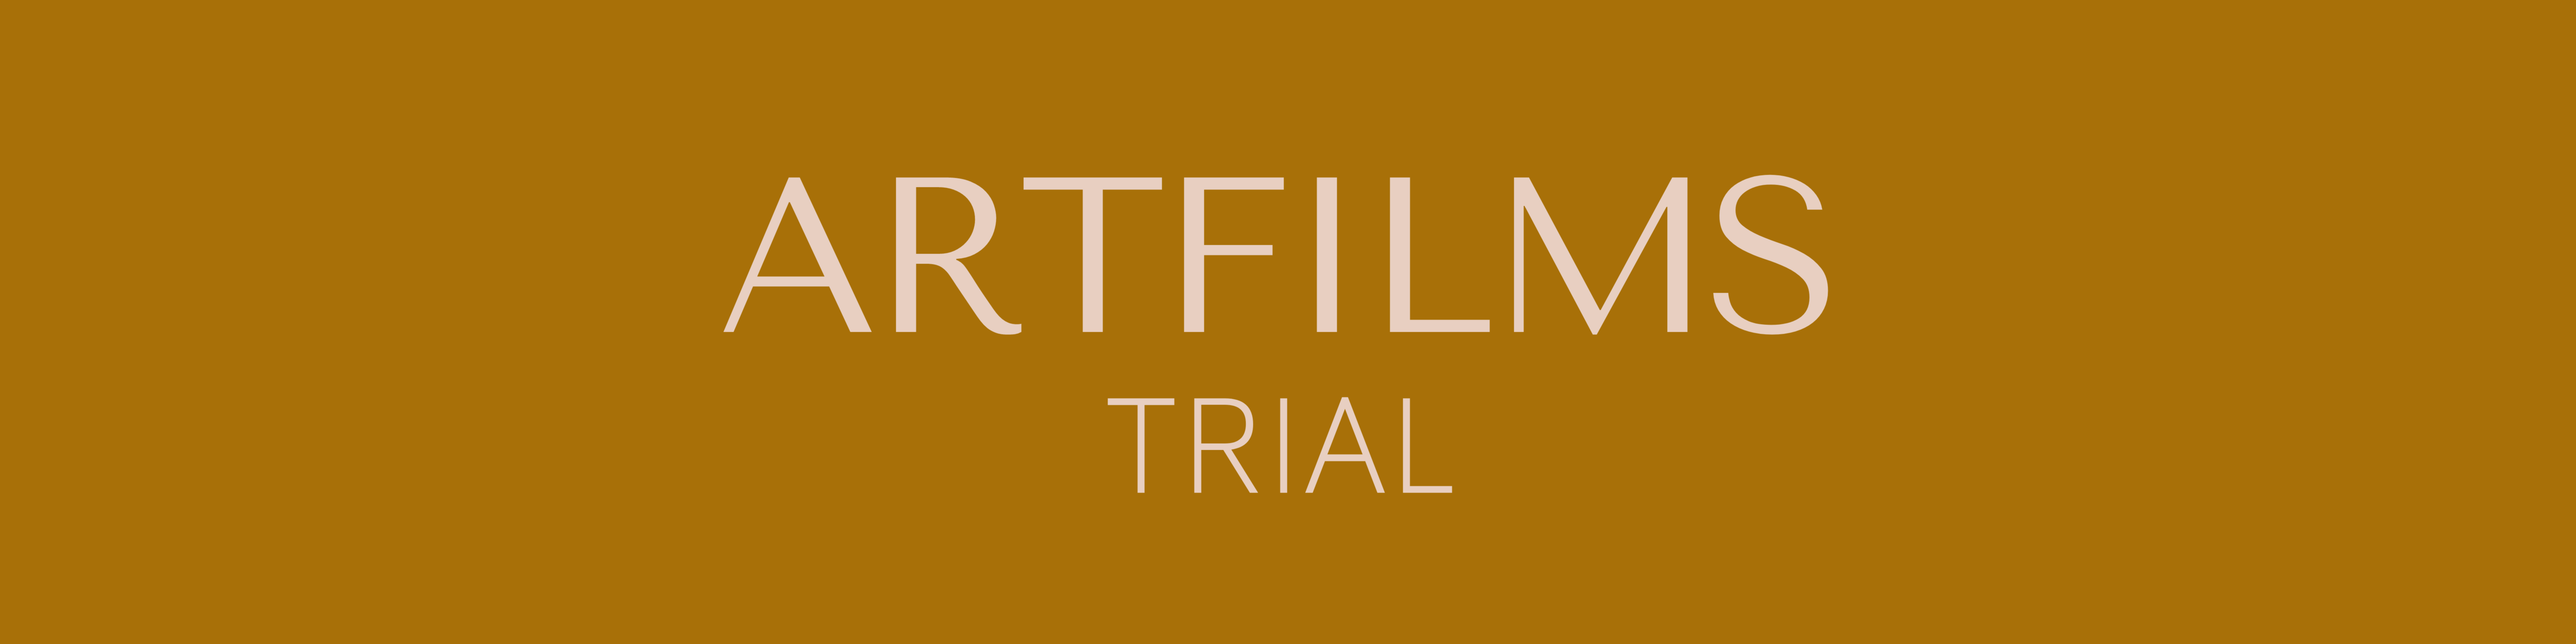 ArtFilms Trial